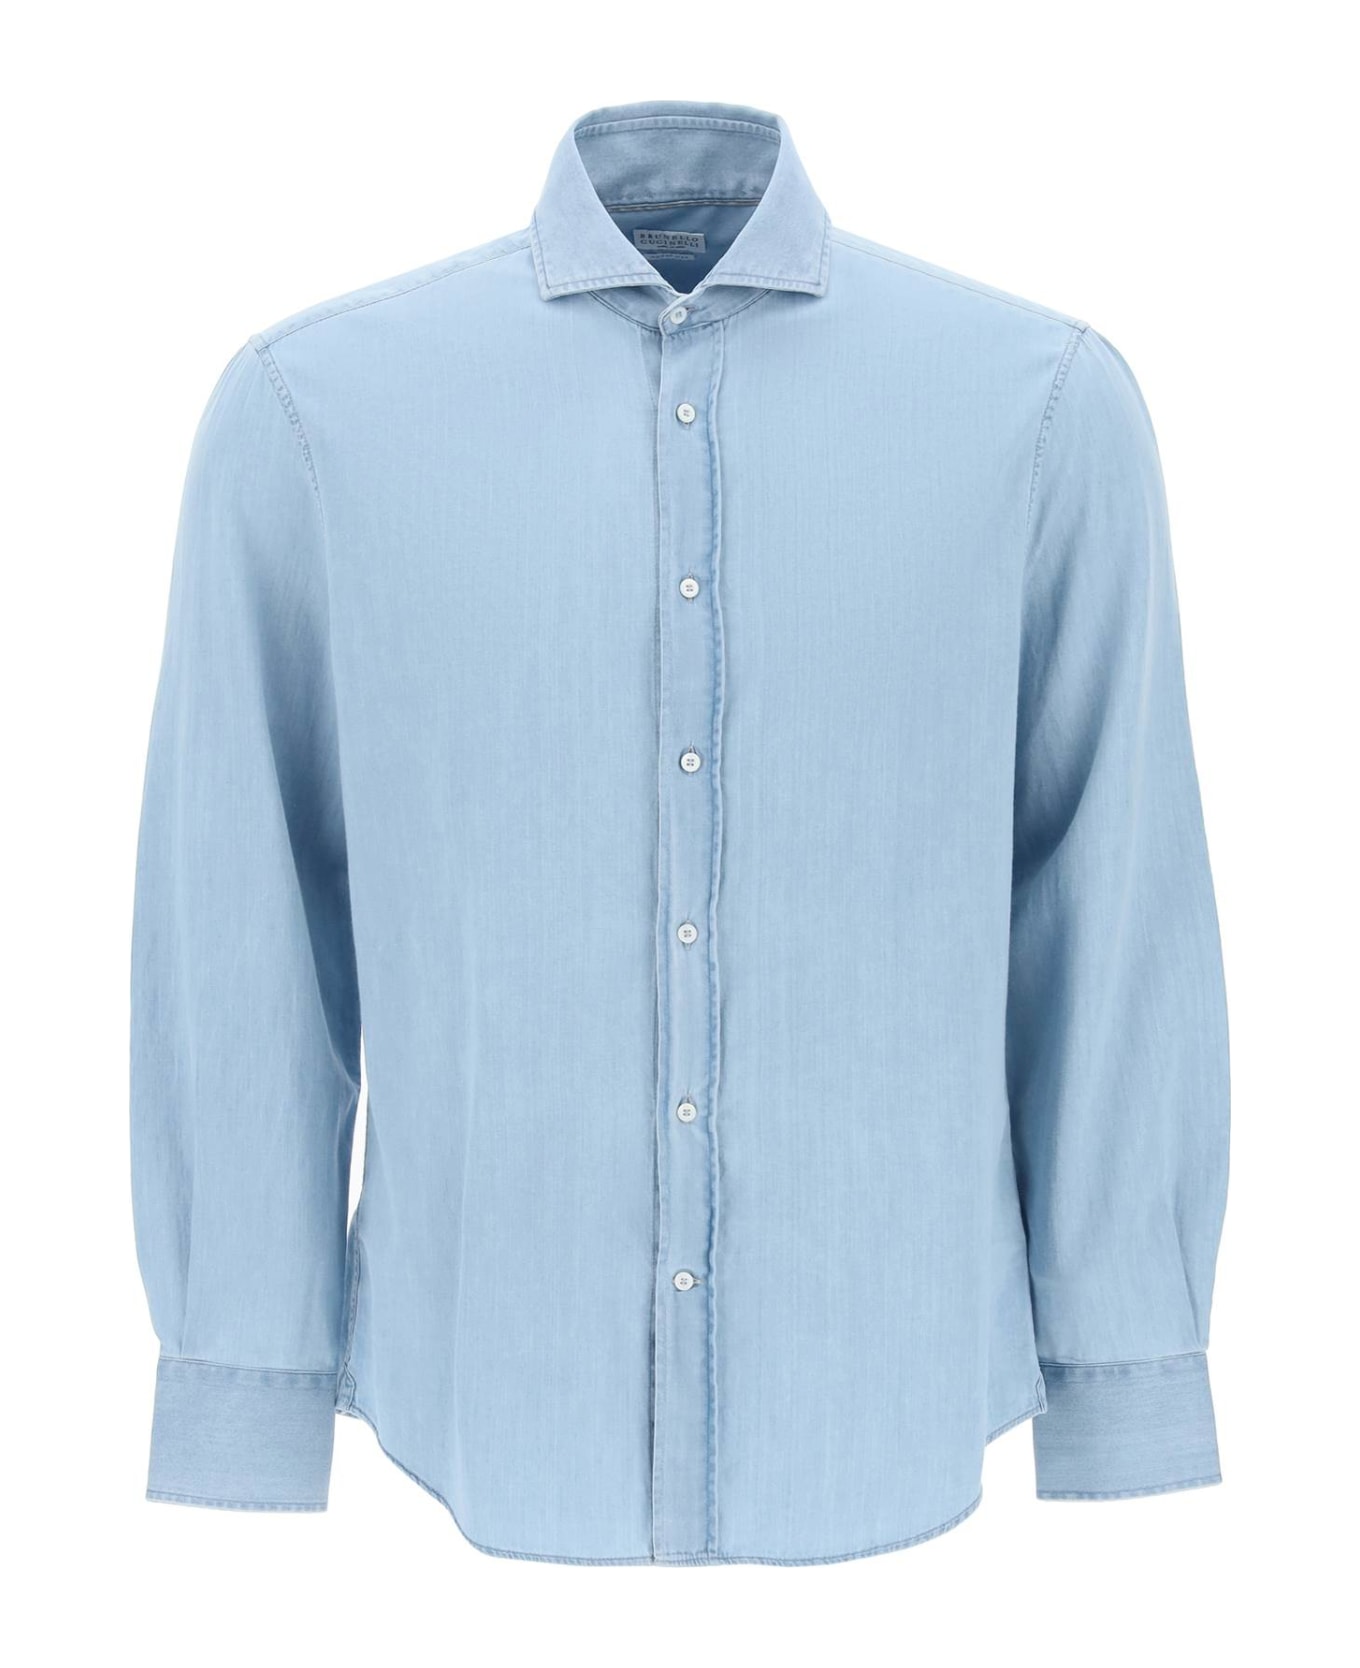 Brunello Cucinelli Chambray Shirt - DENIM CHIARISSIMO (Light blue)